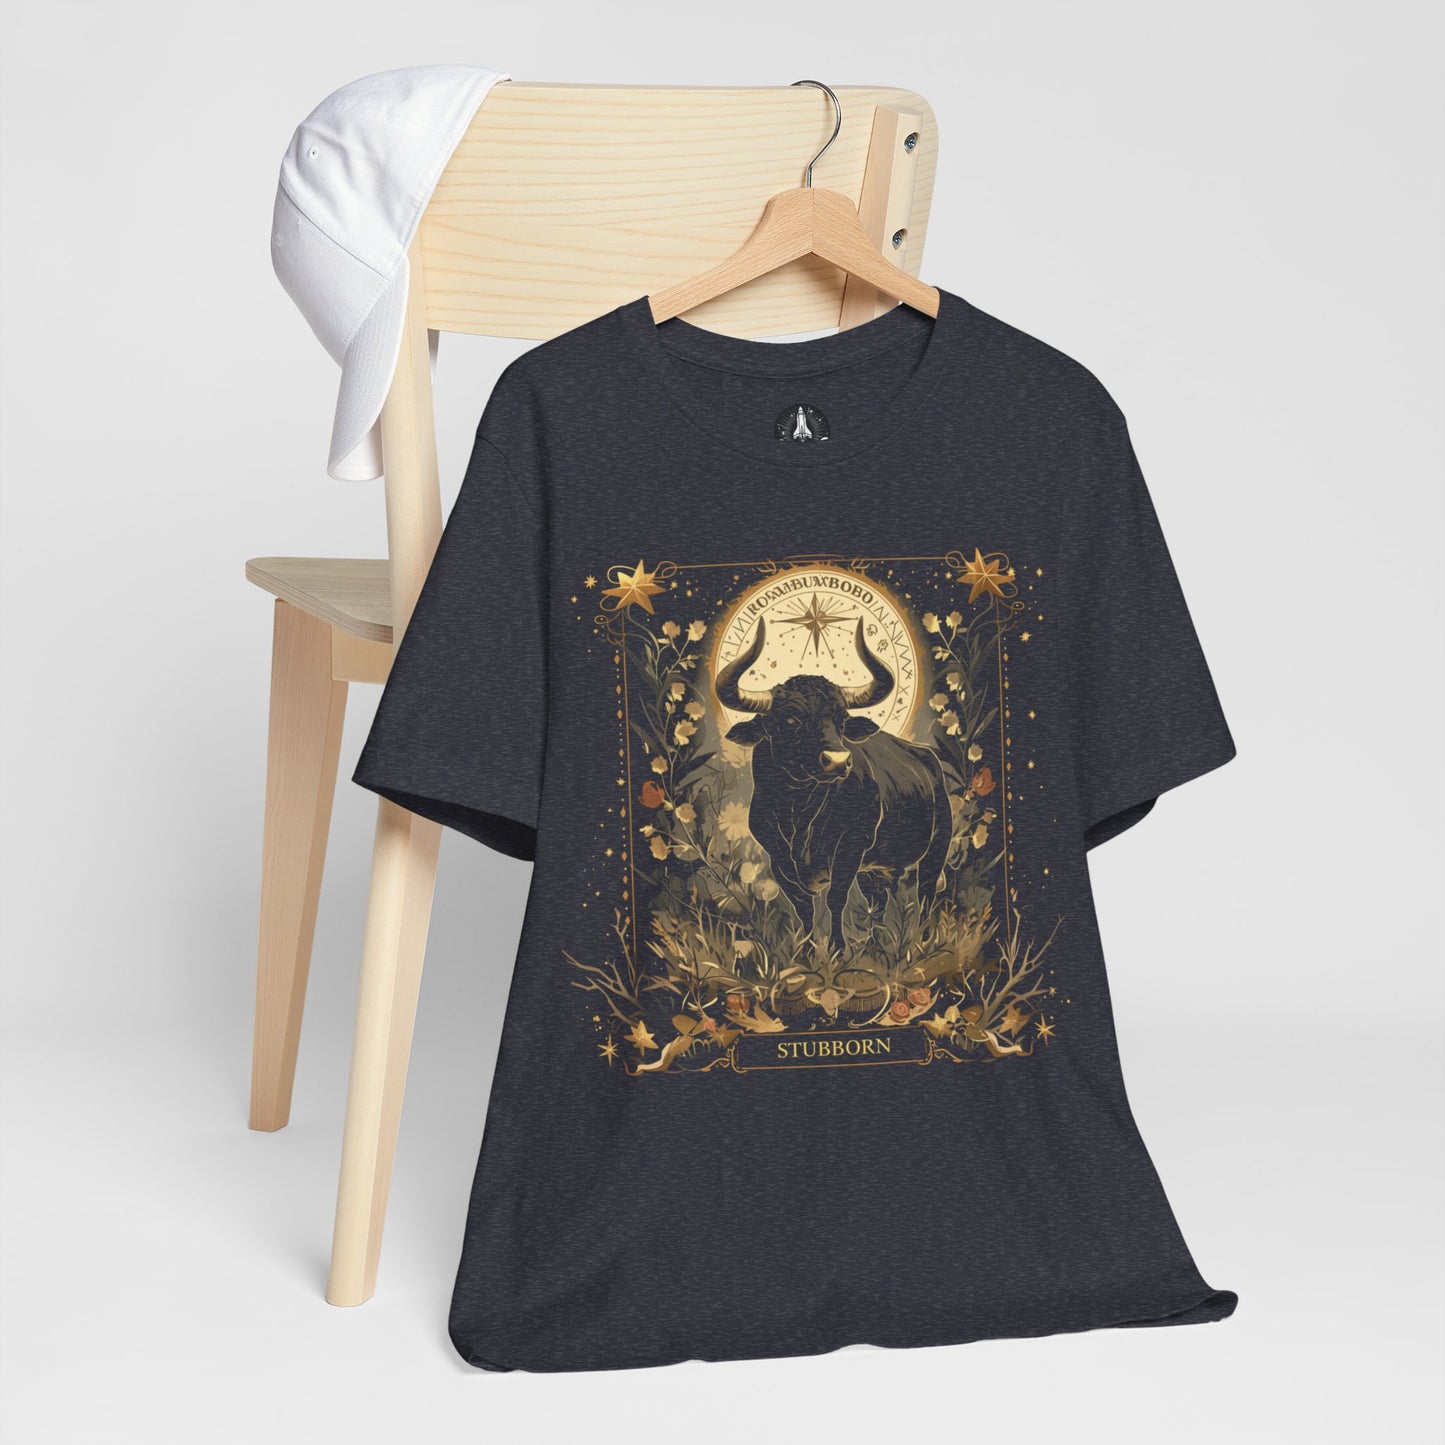 Taurus Astrology: The Stoic Guardian Bull T-Shirt